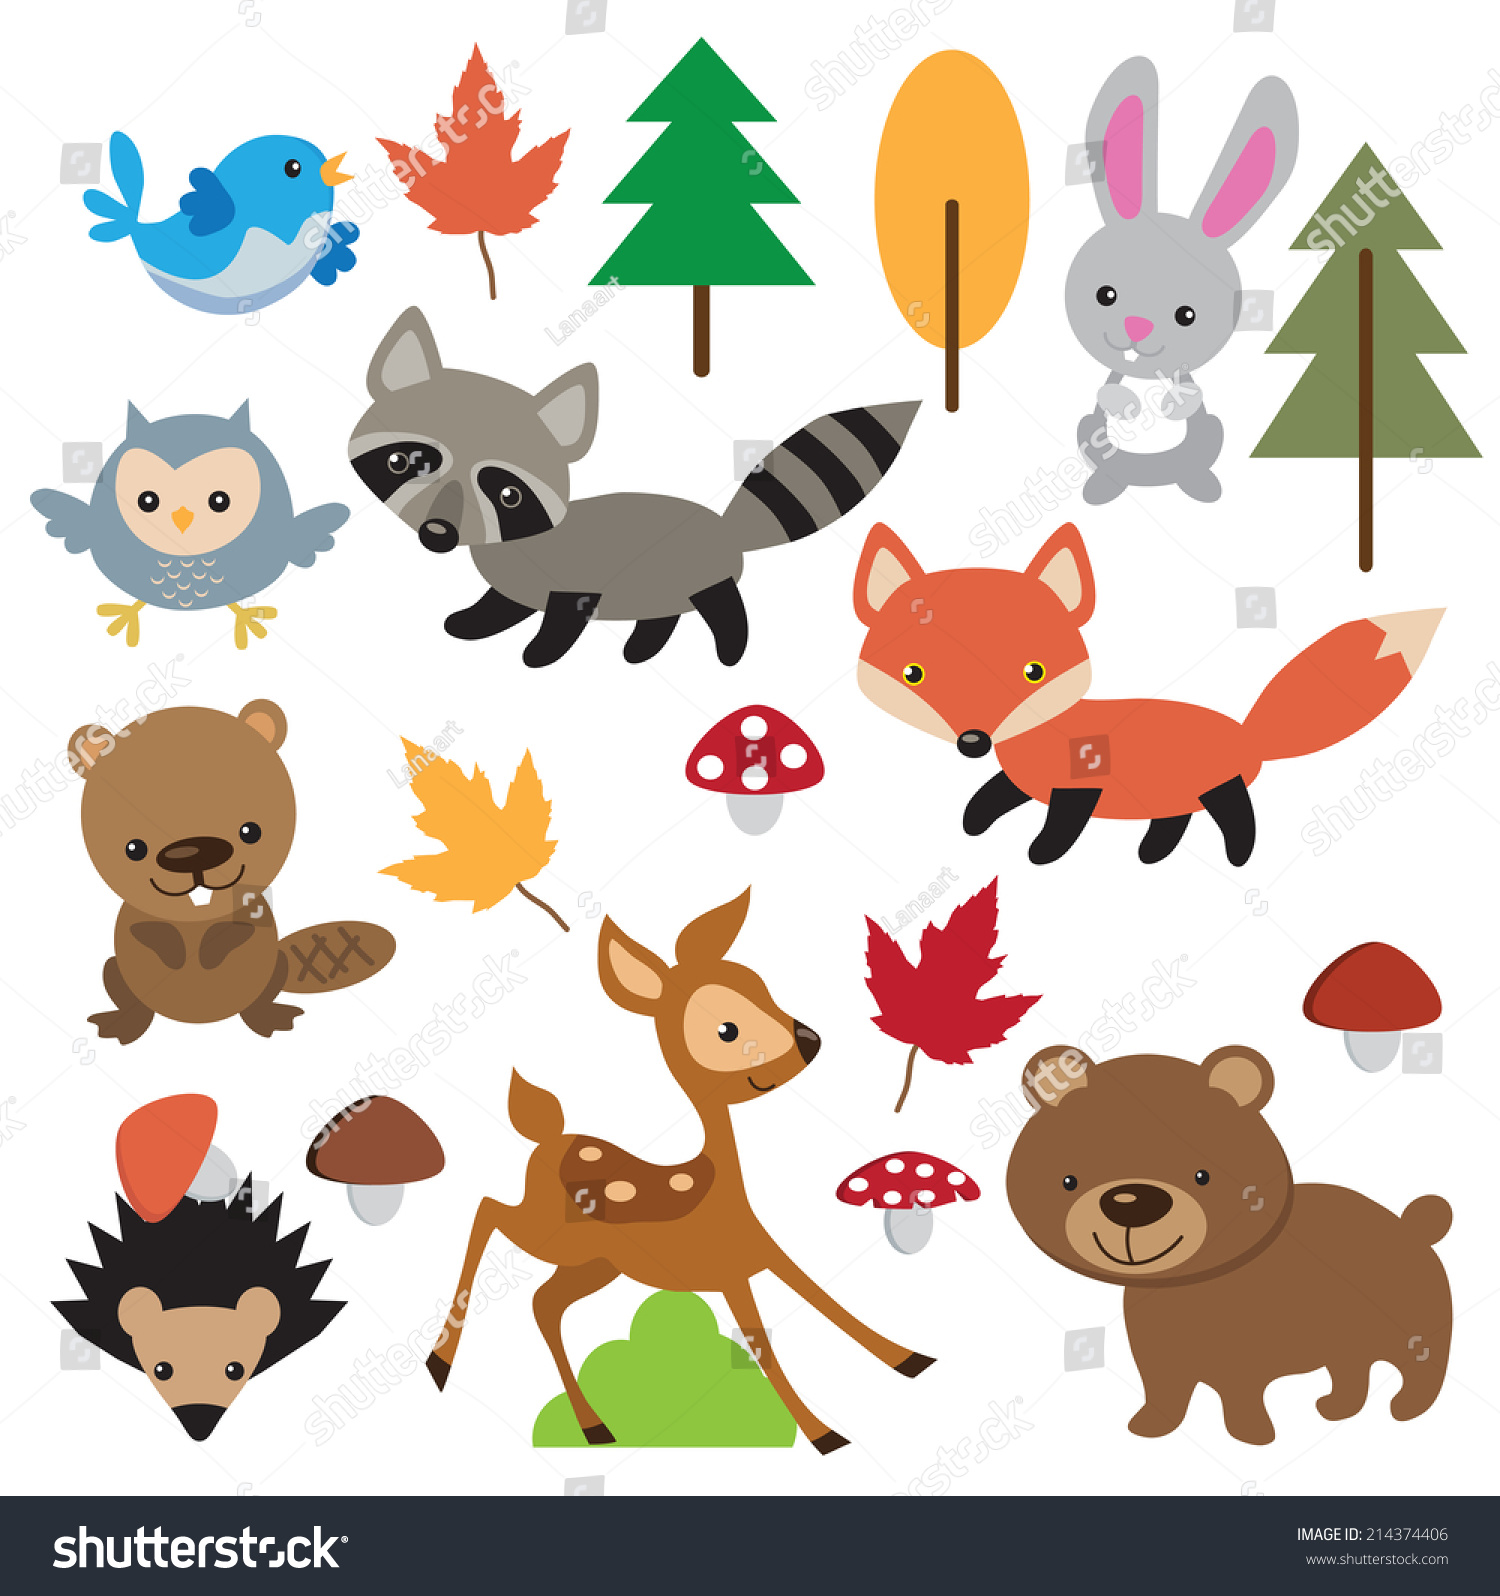 Forest Animals Vector Illustration Stock Vector 214374406 - Shutterstock